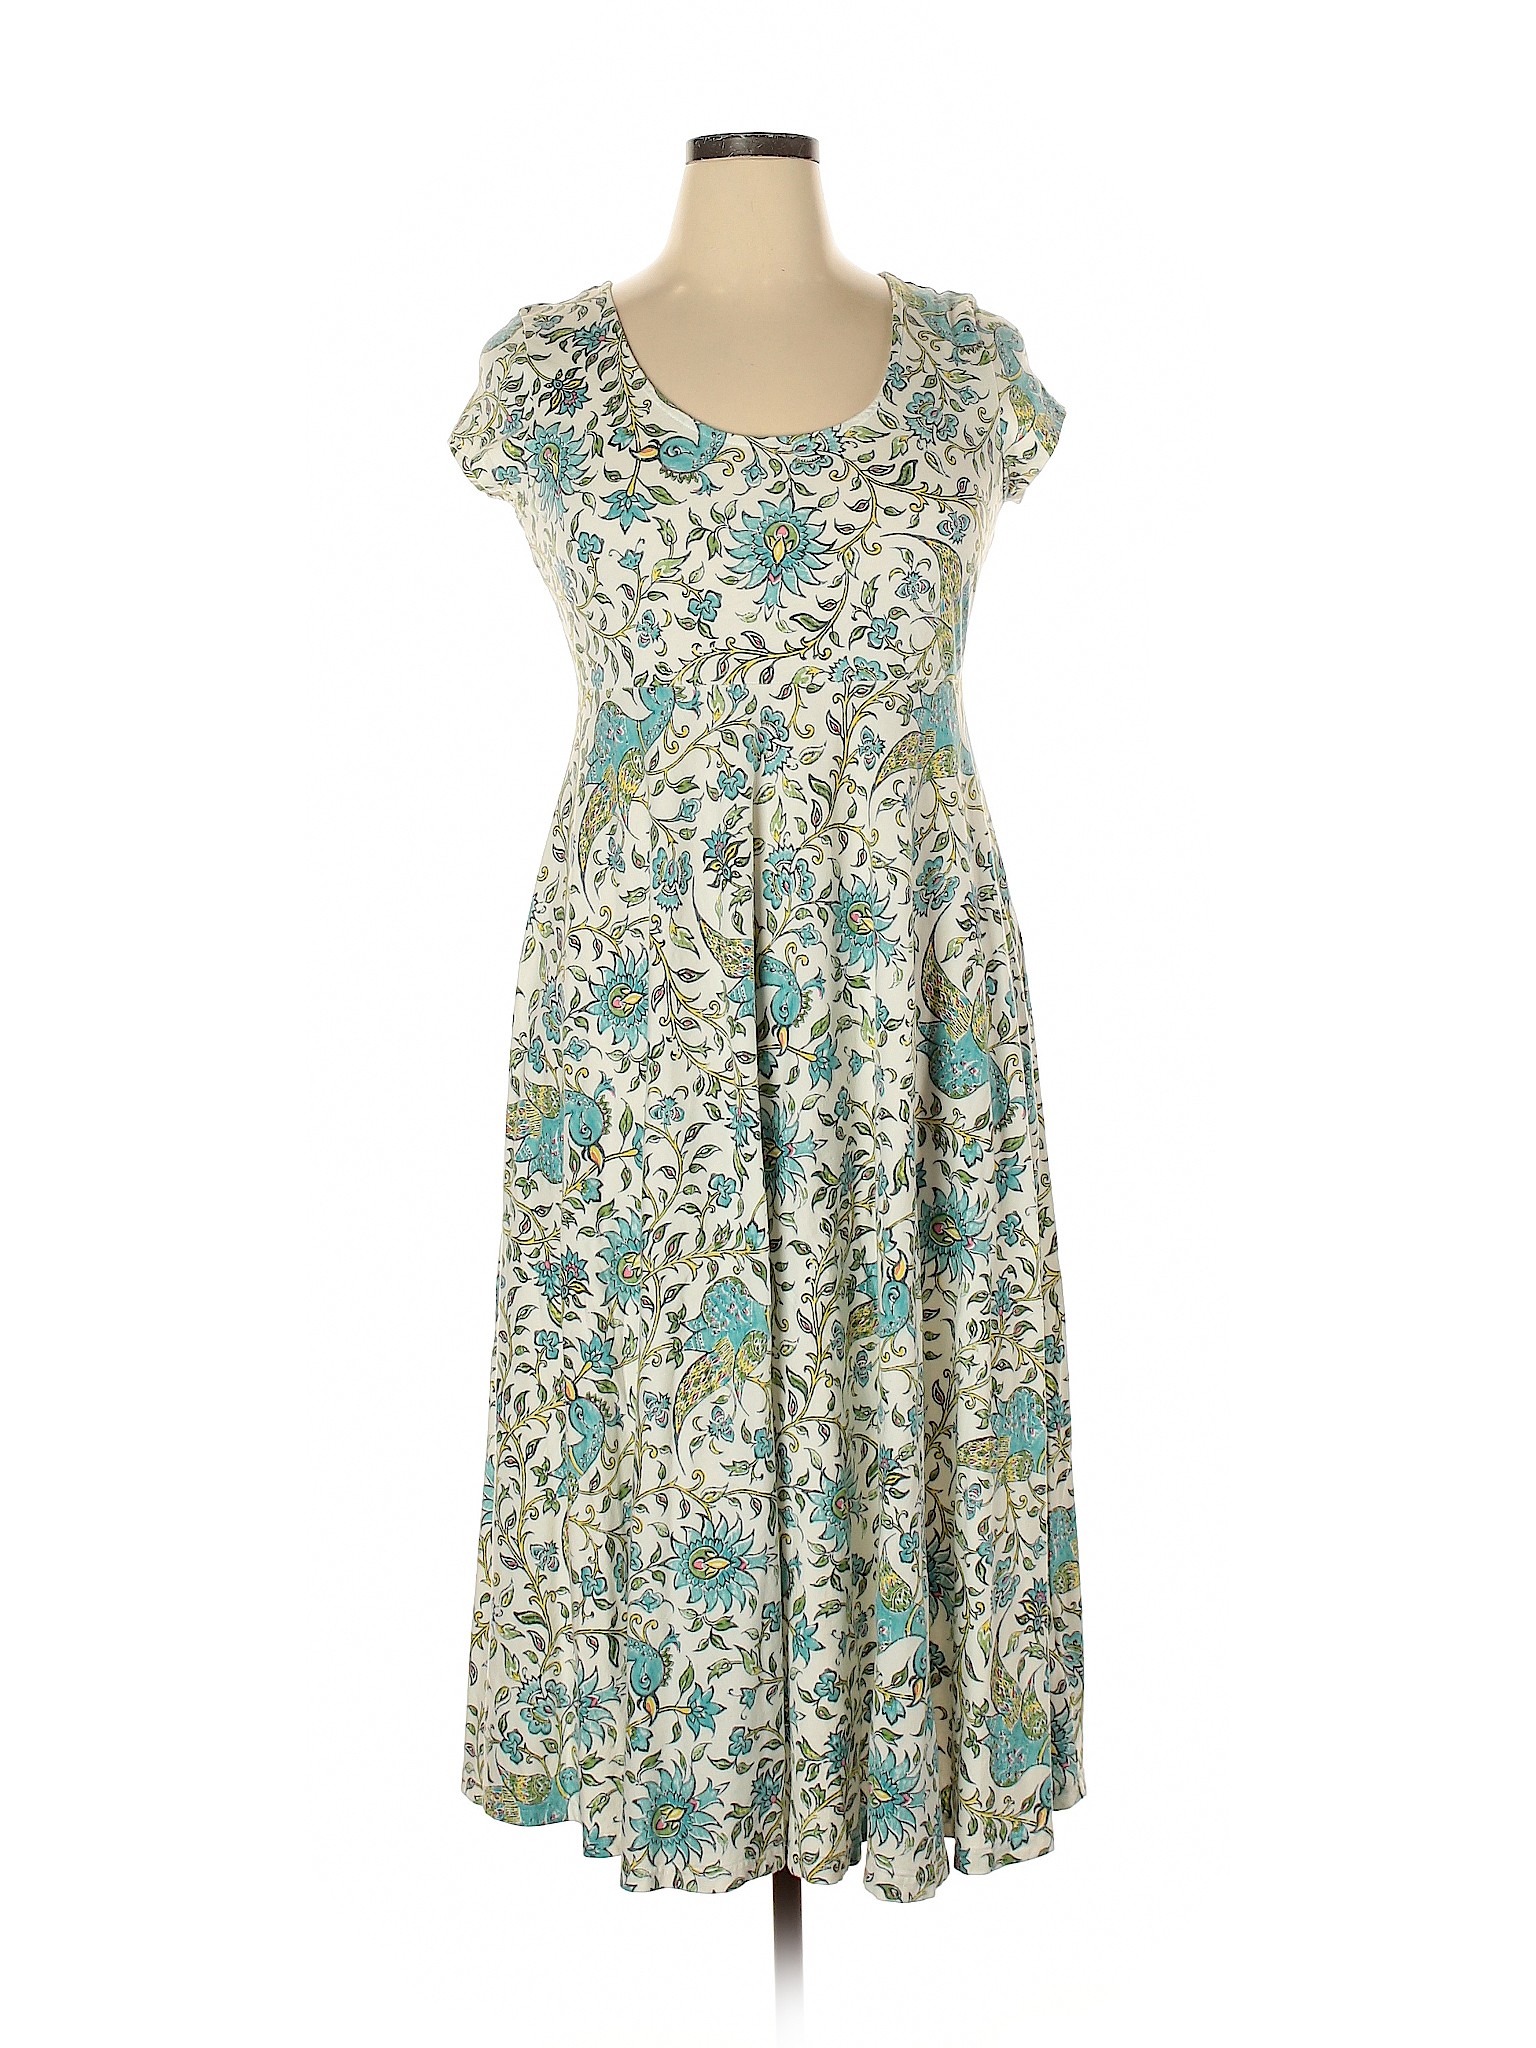 Chaps Women Blue Casual Dress XL Petite | eBay